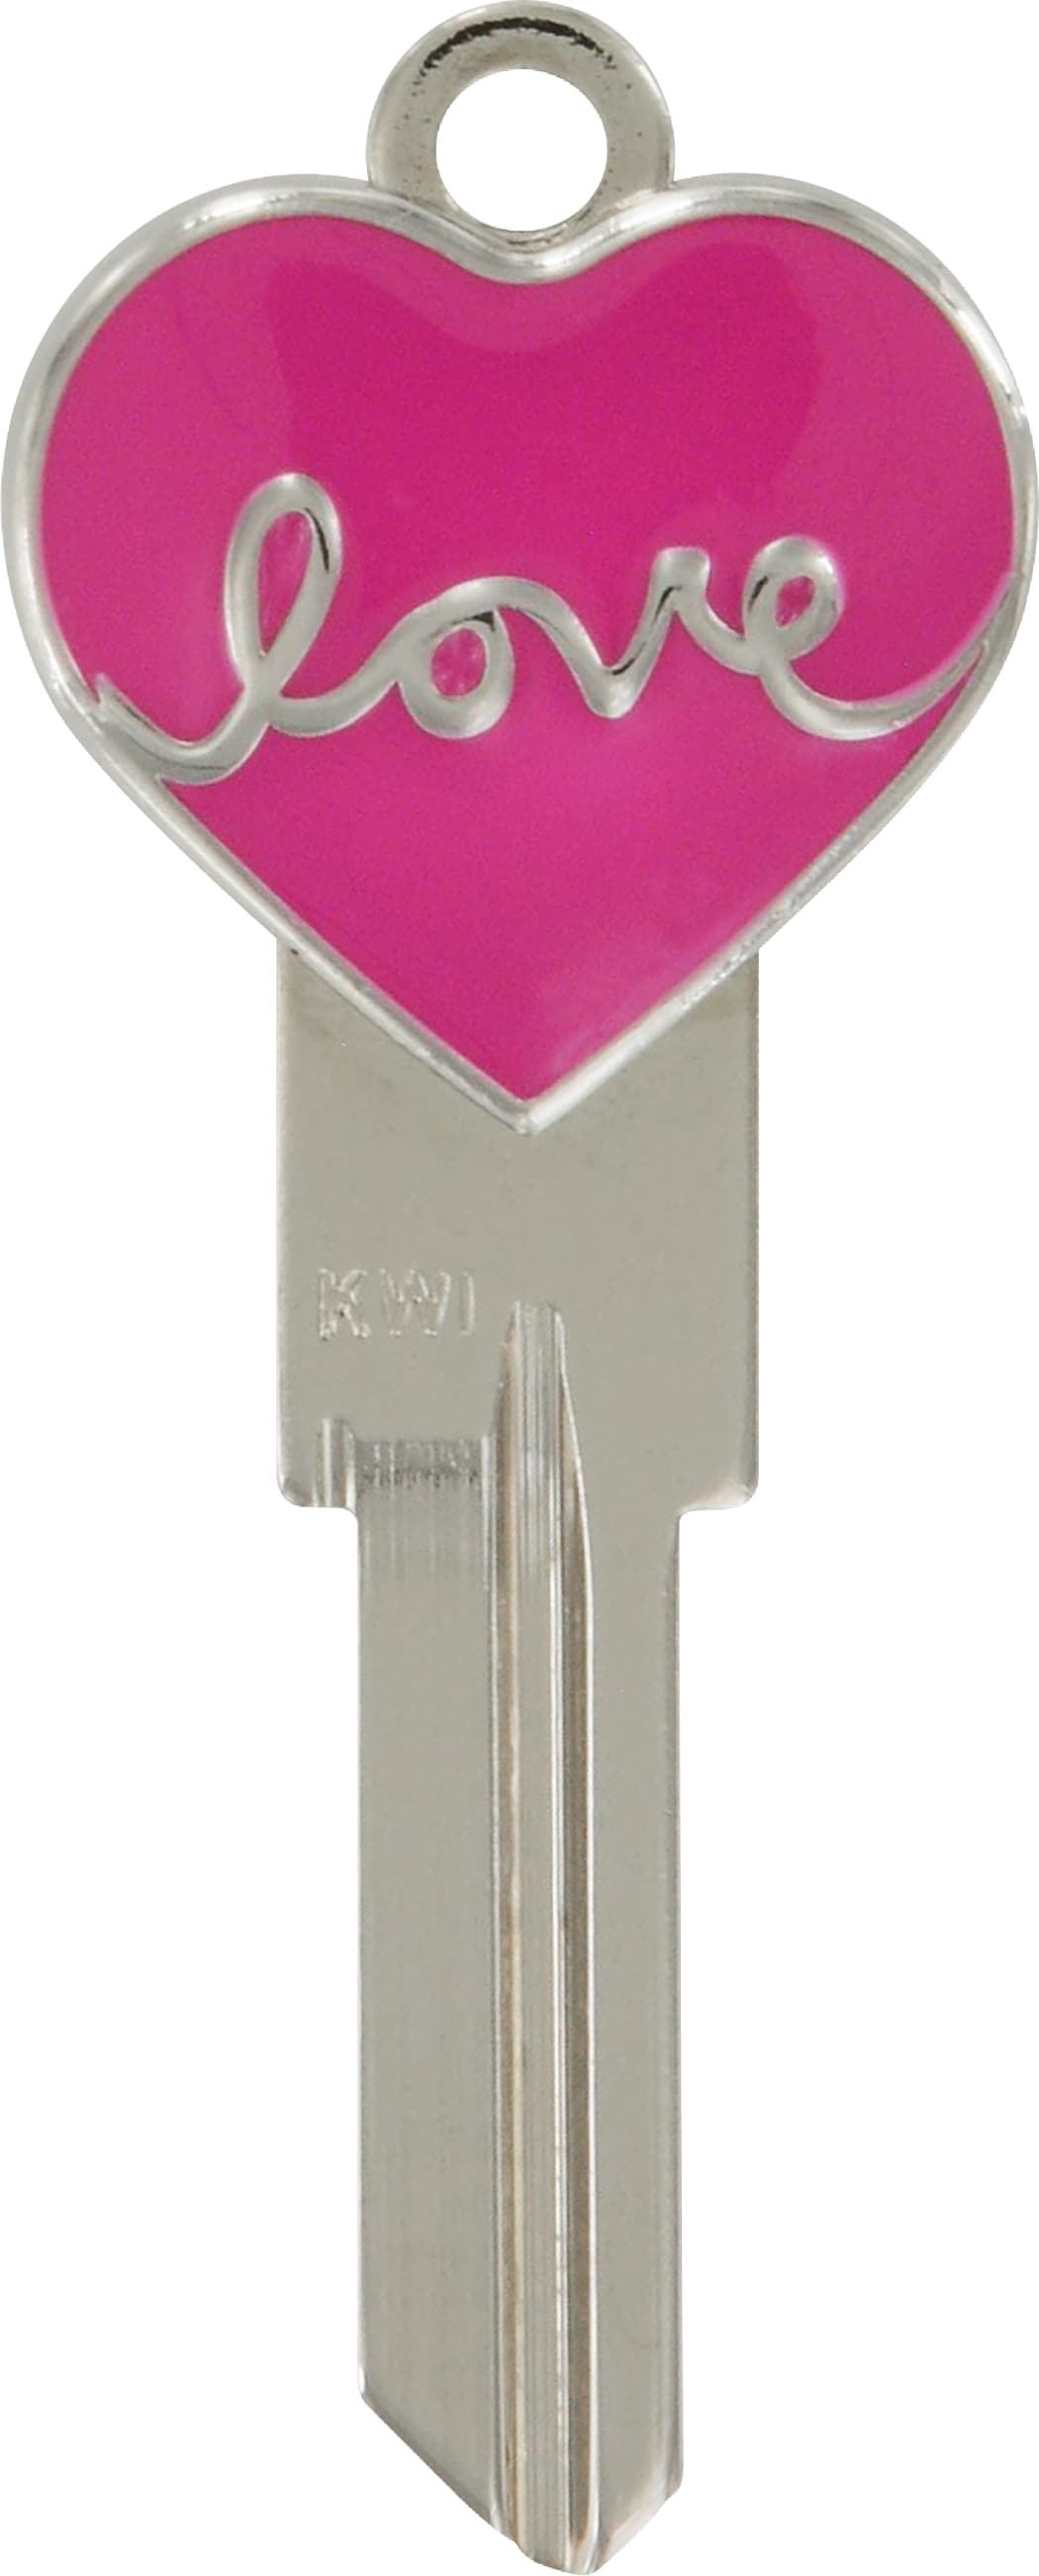 Hillman Pink Decorative Key Brass House/Entry Key Blank in the Key ...